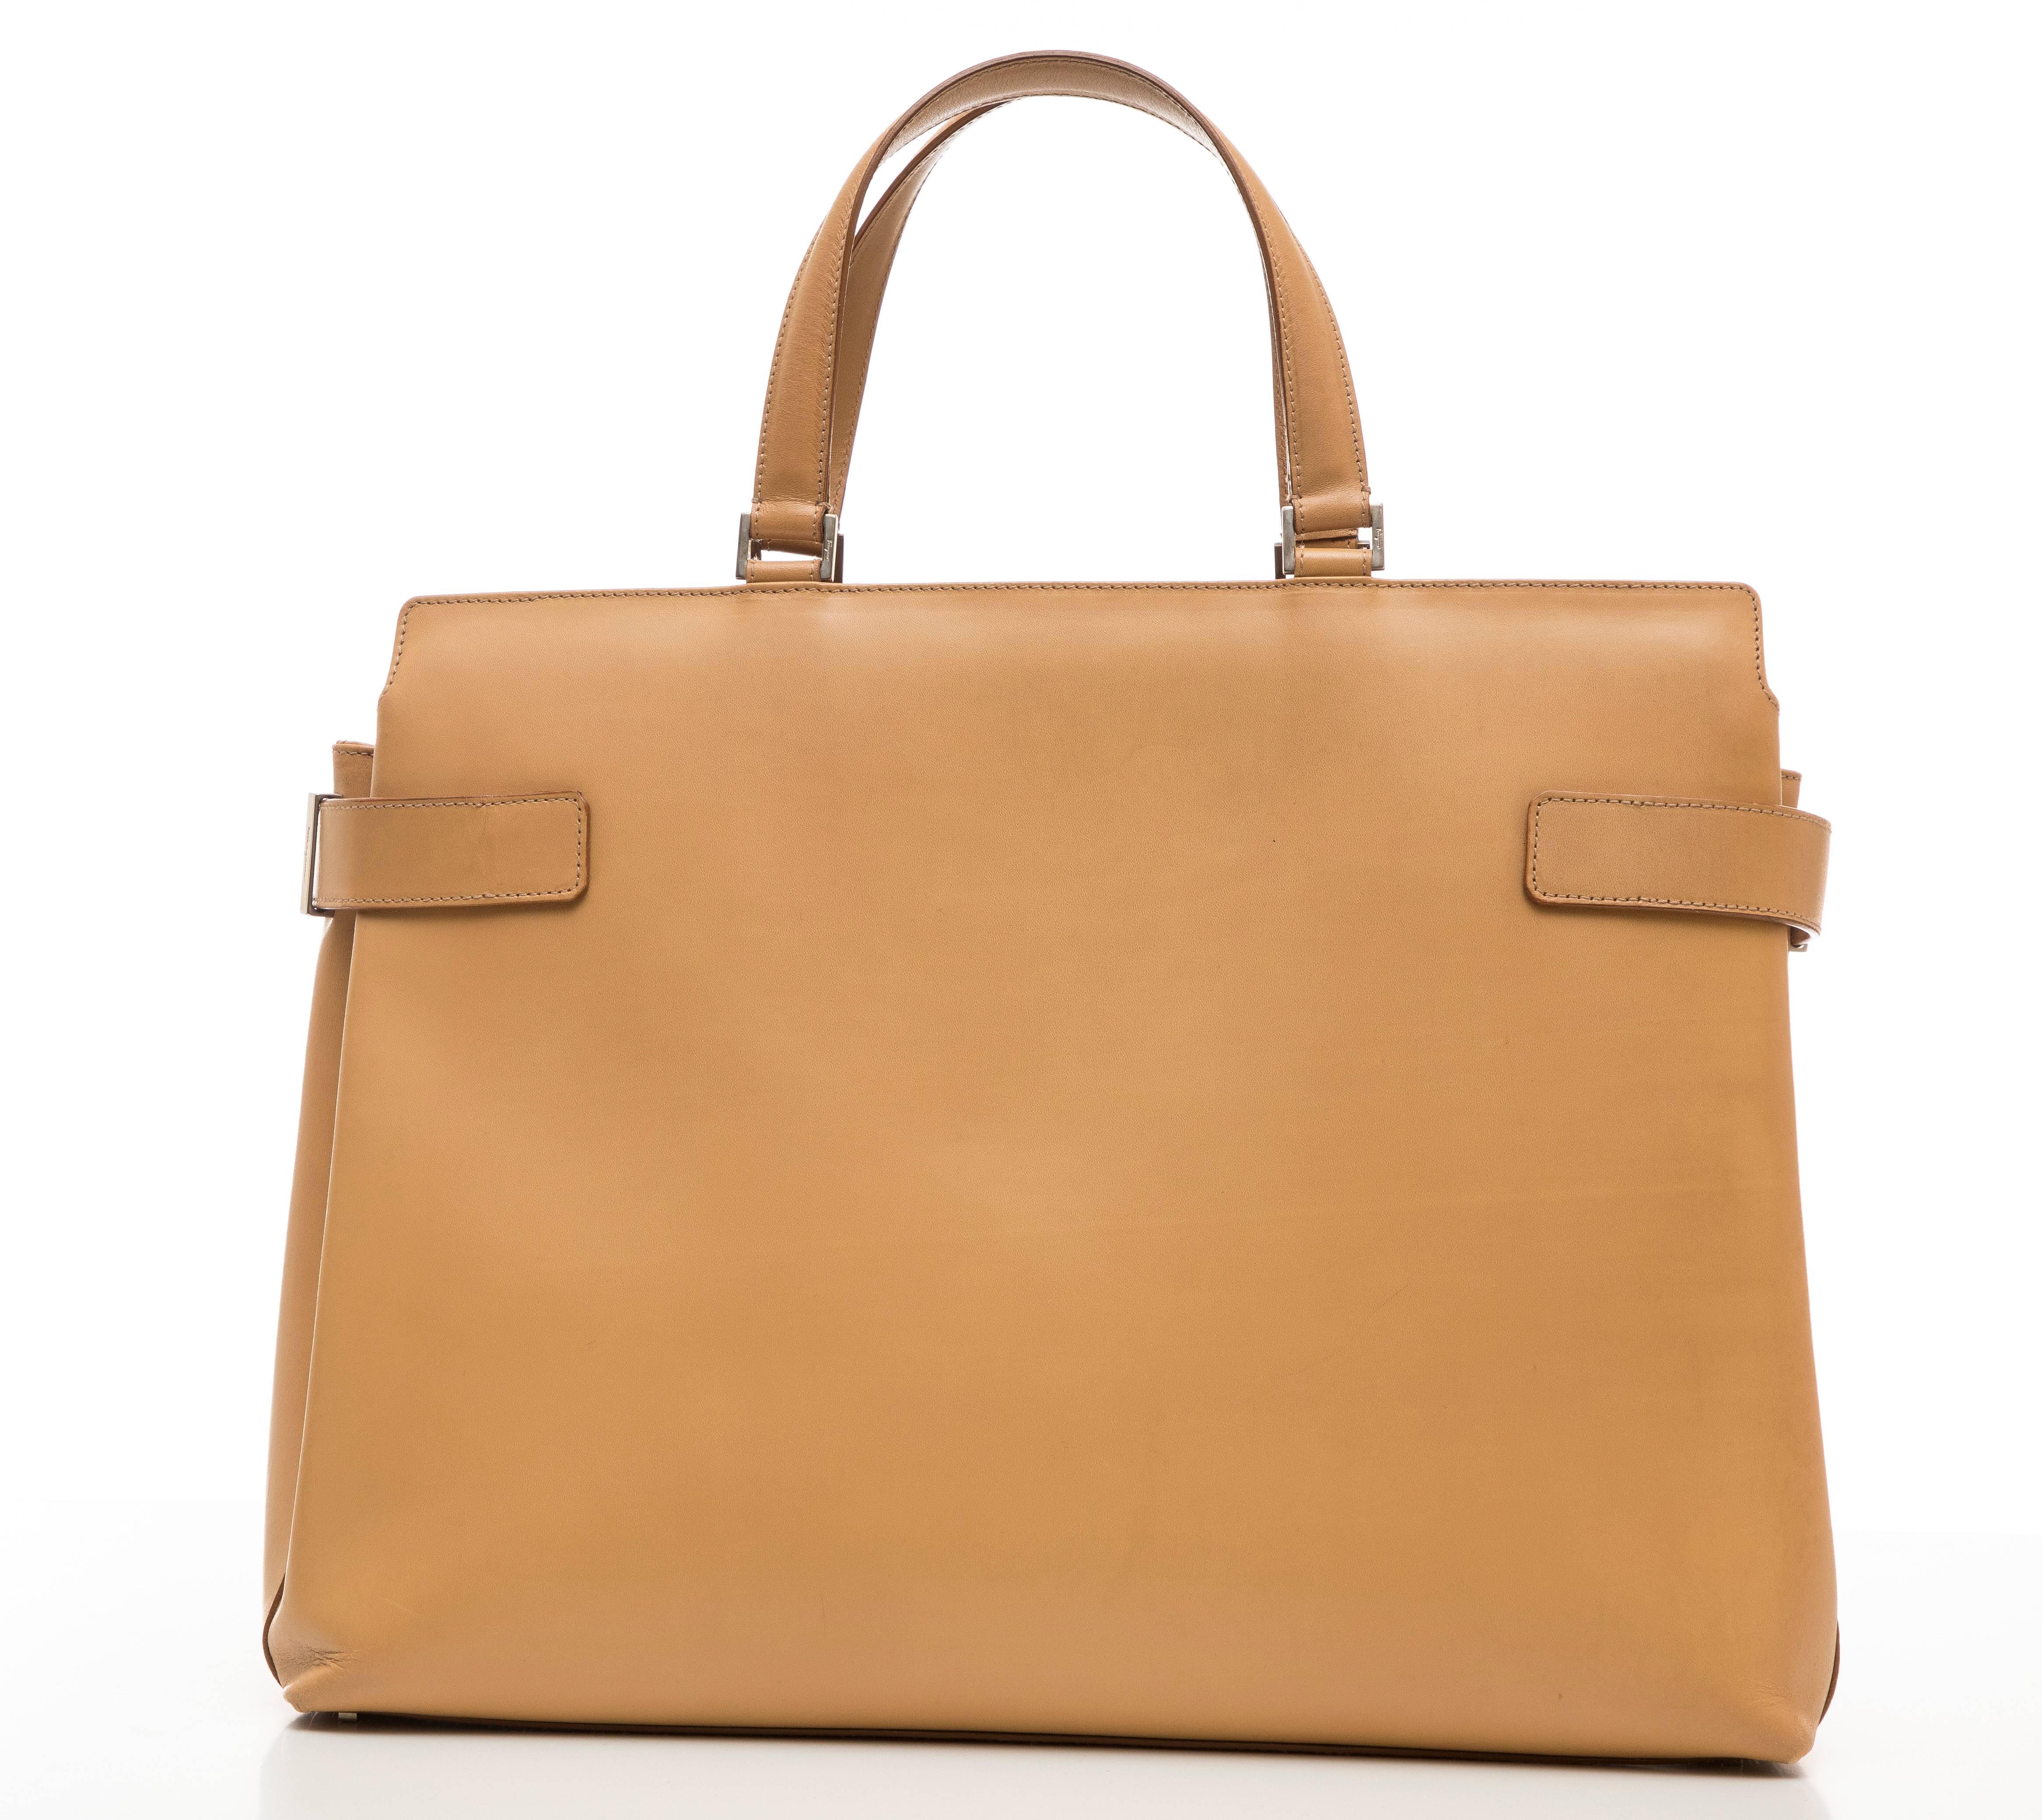 Salvatore Ferragamo Large Butterscotch Leather Top Handle Handbag In Good Condition For Sale In Cincinnati, OH